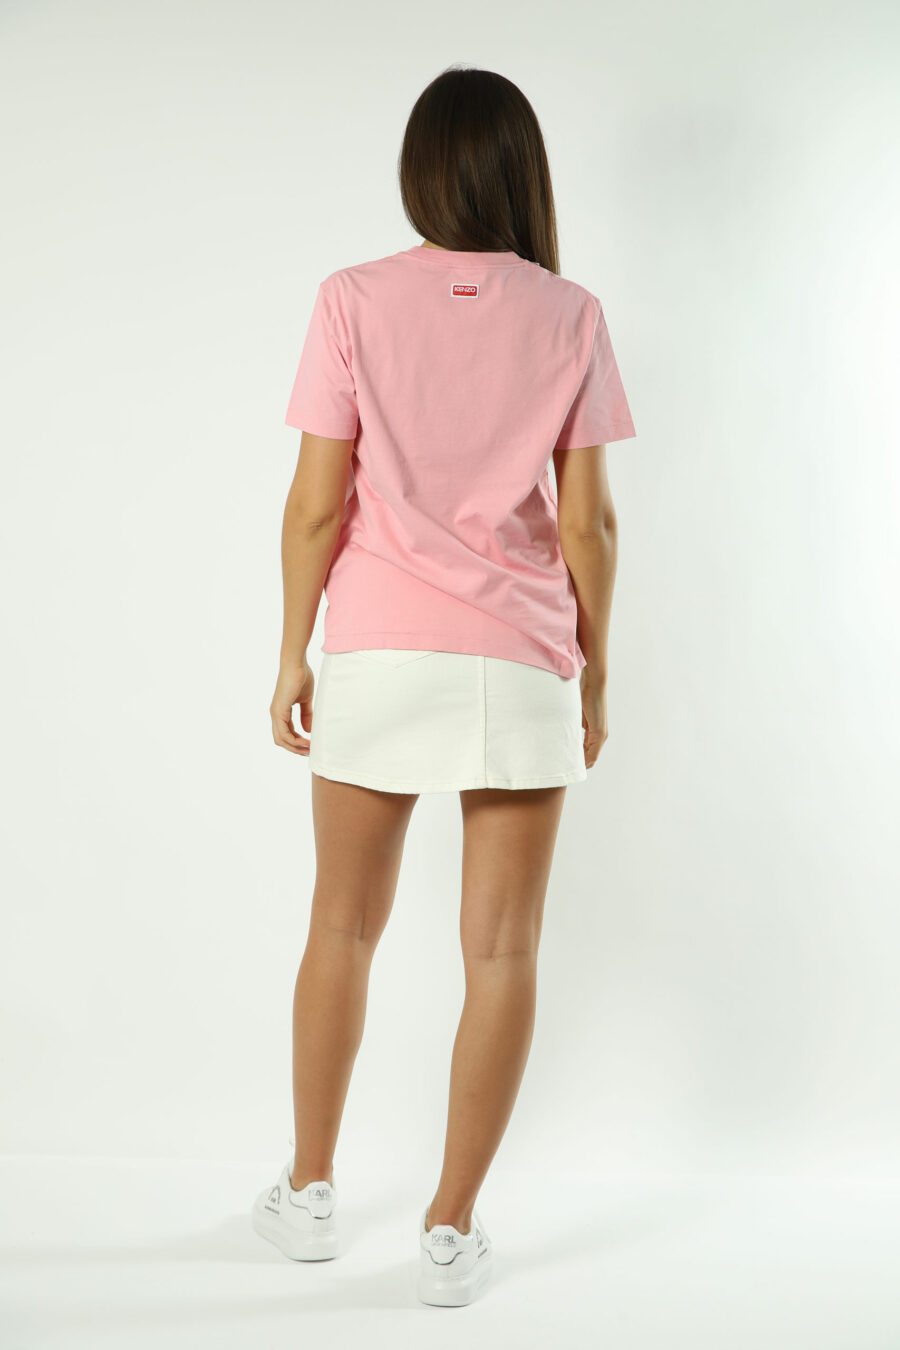 Pink T-shirt with orange flower maxilogo - Photos 1407